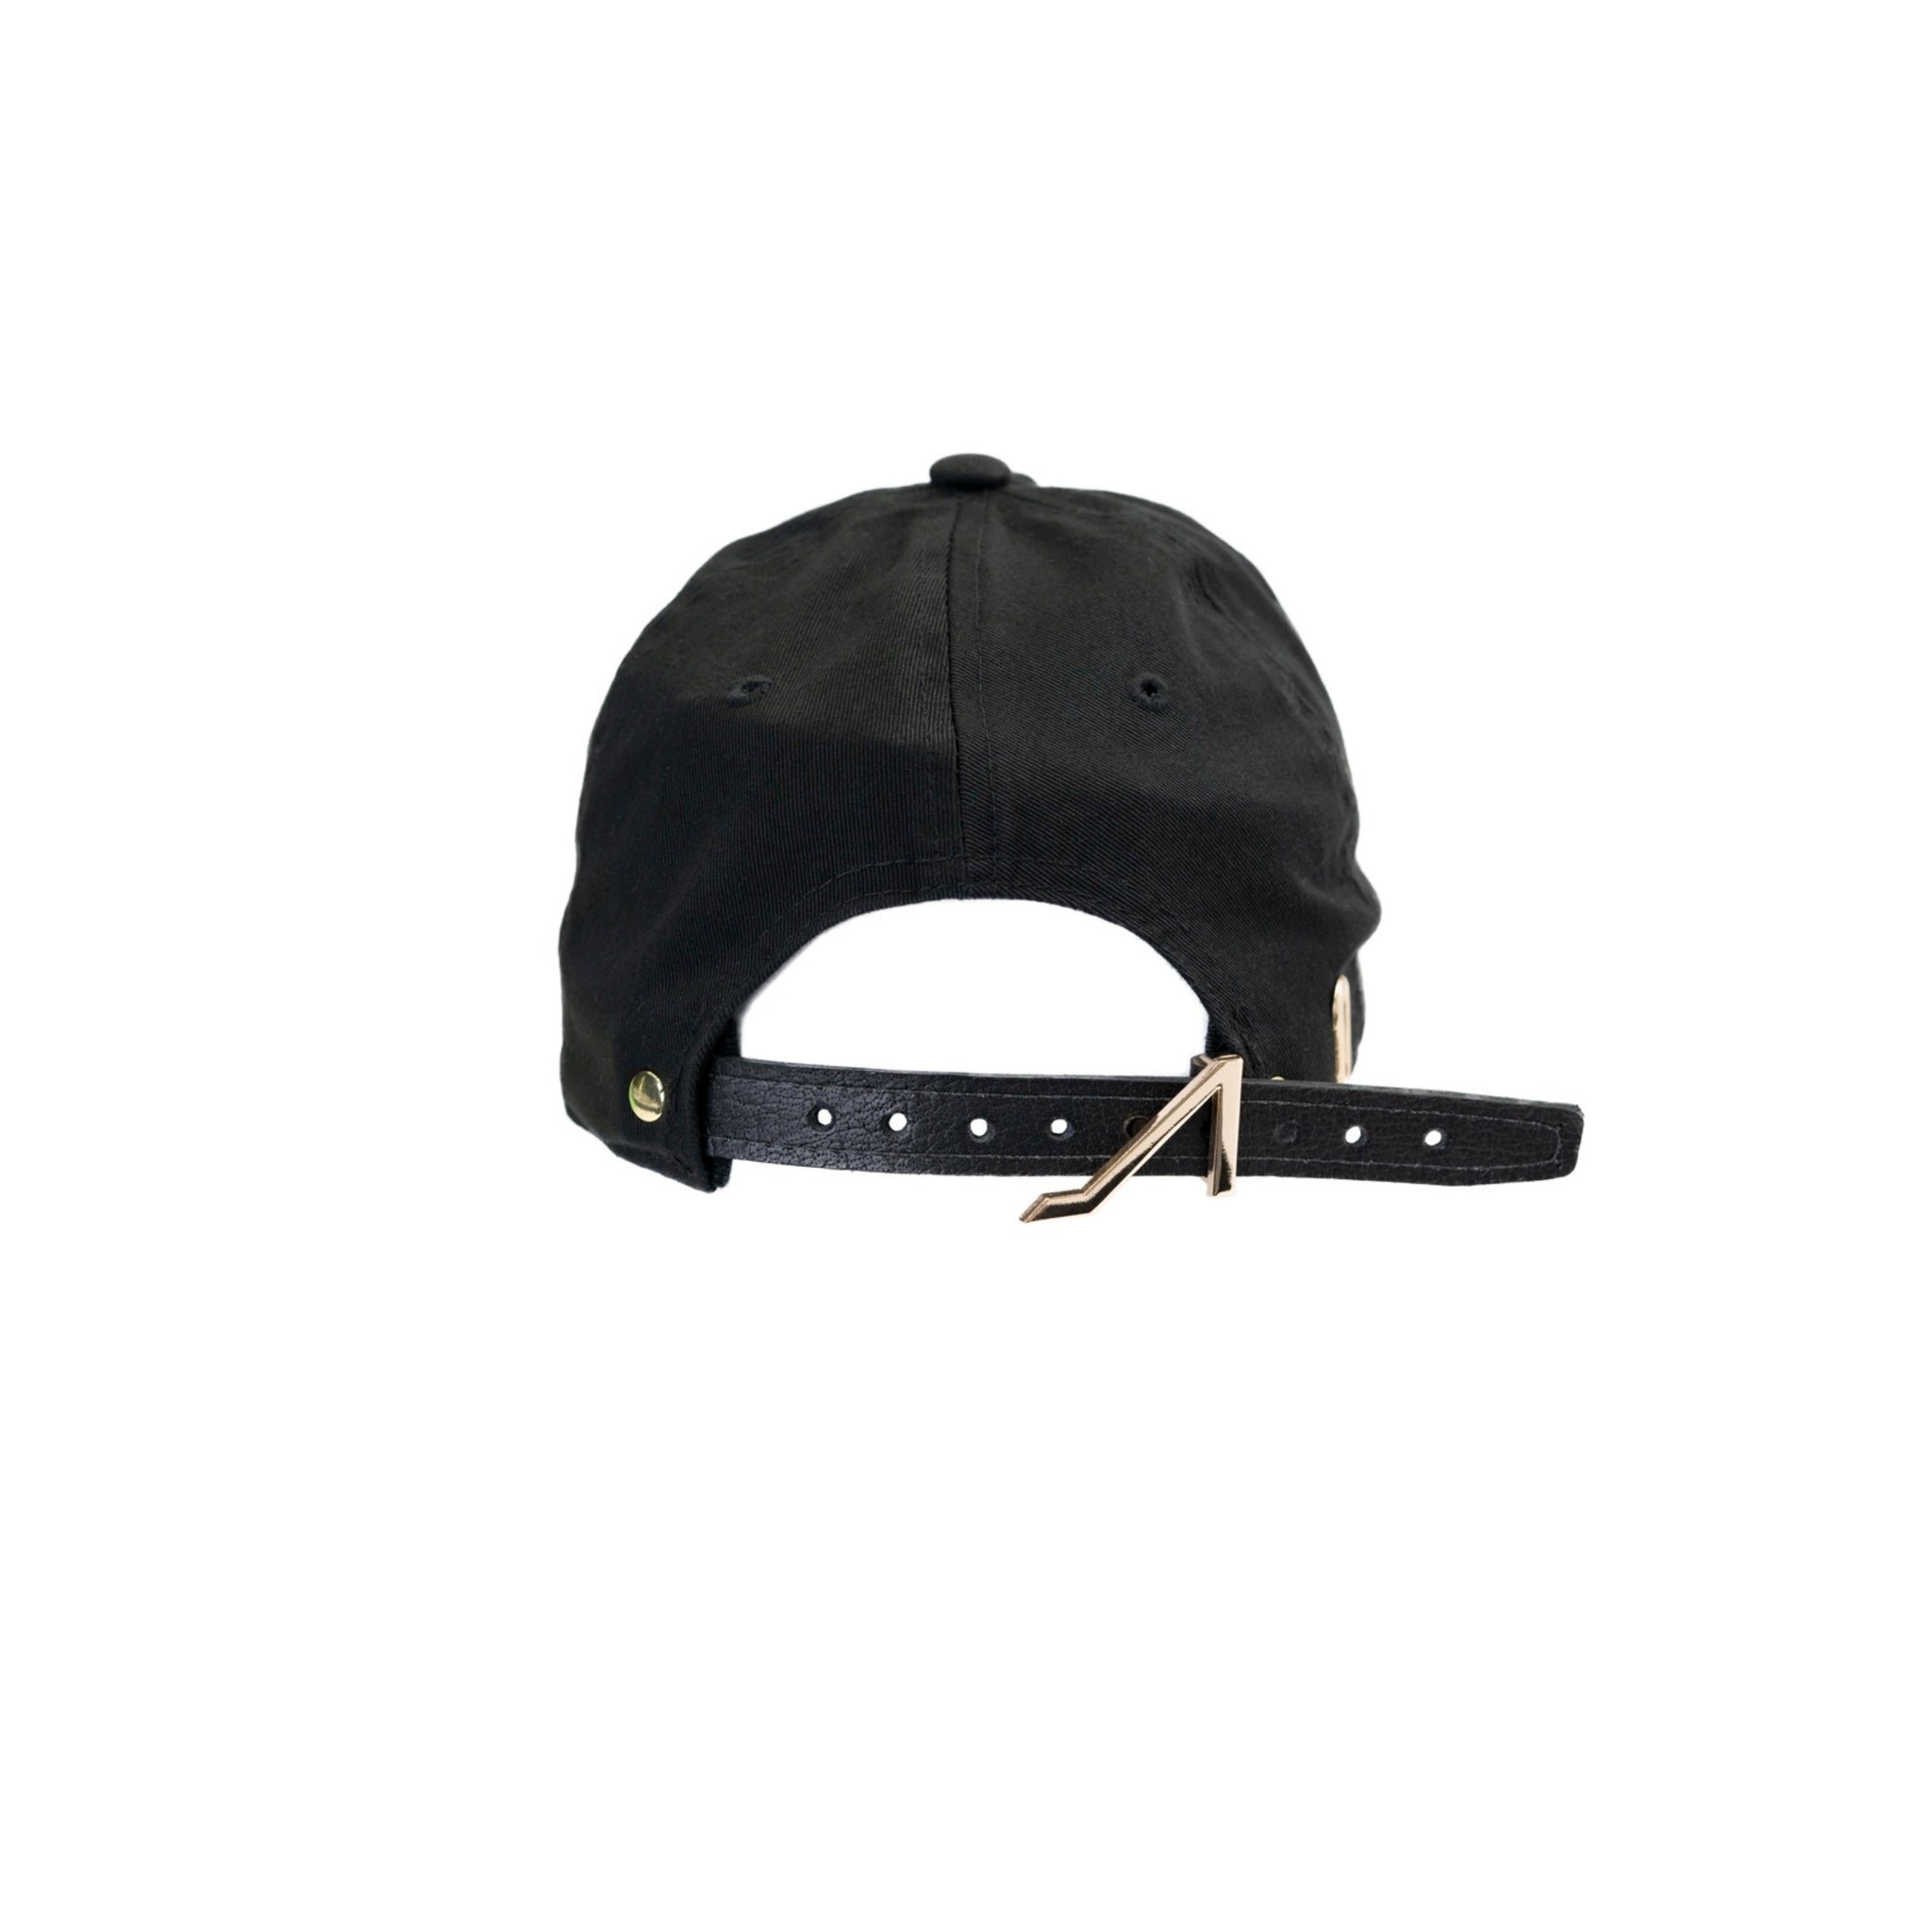 Black cotton hat with black lizard leather logo